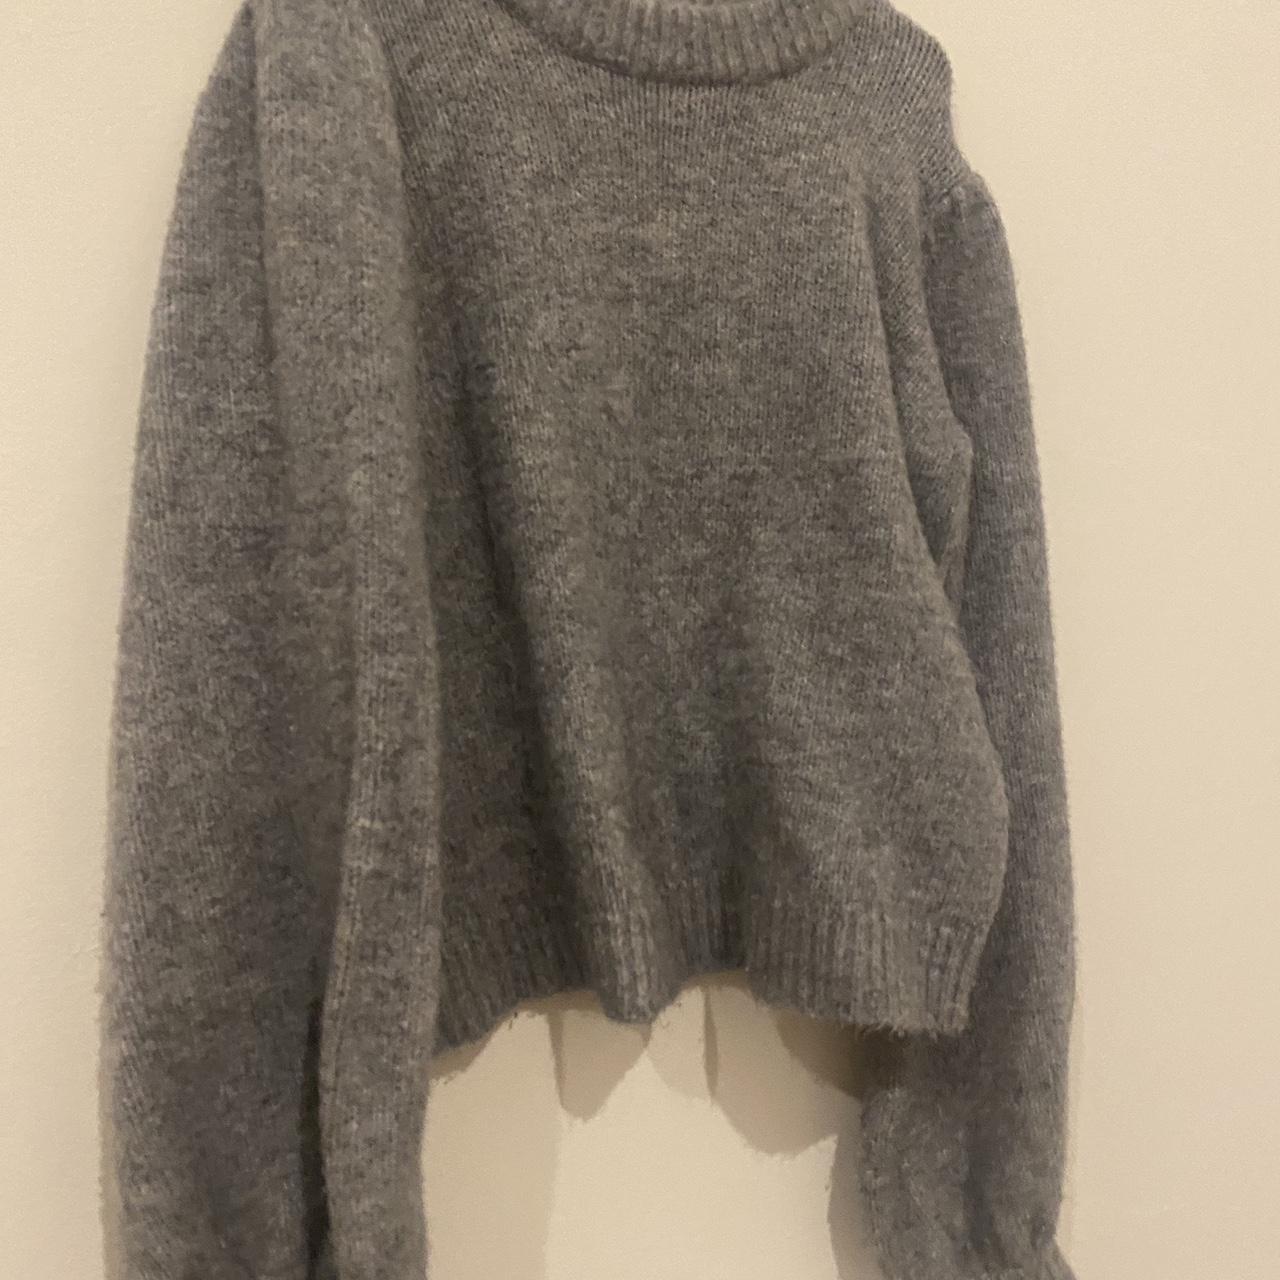 Grey knit jumper with ballon sleeves - Depop